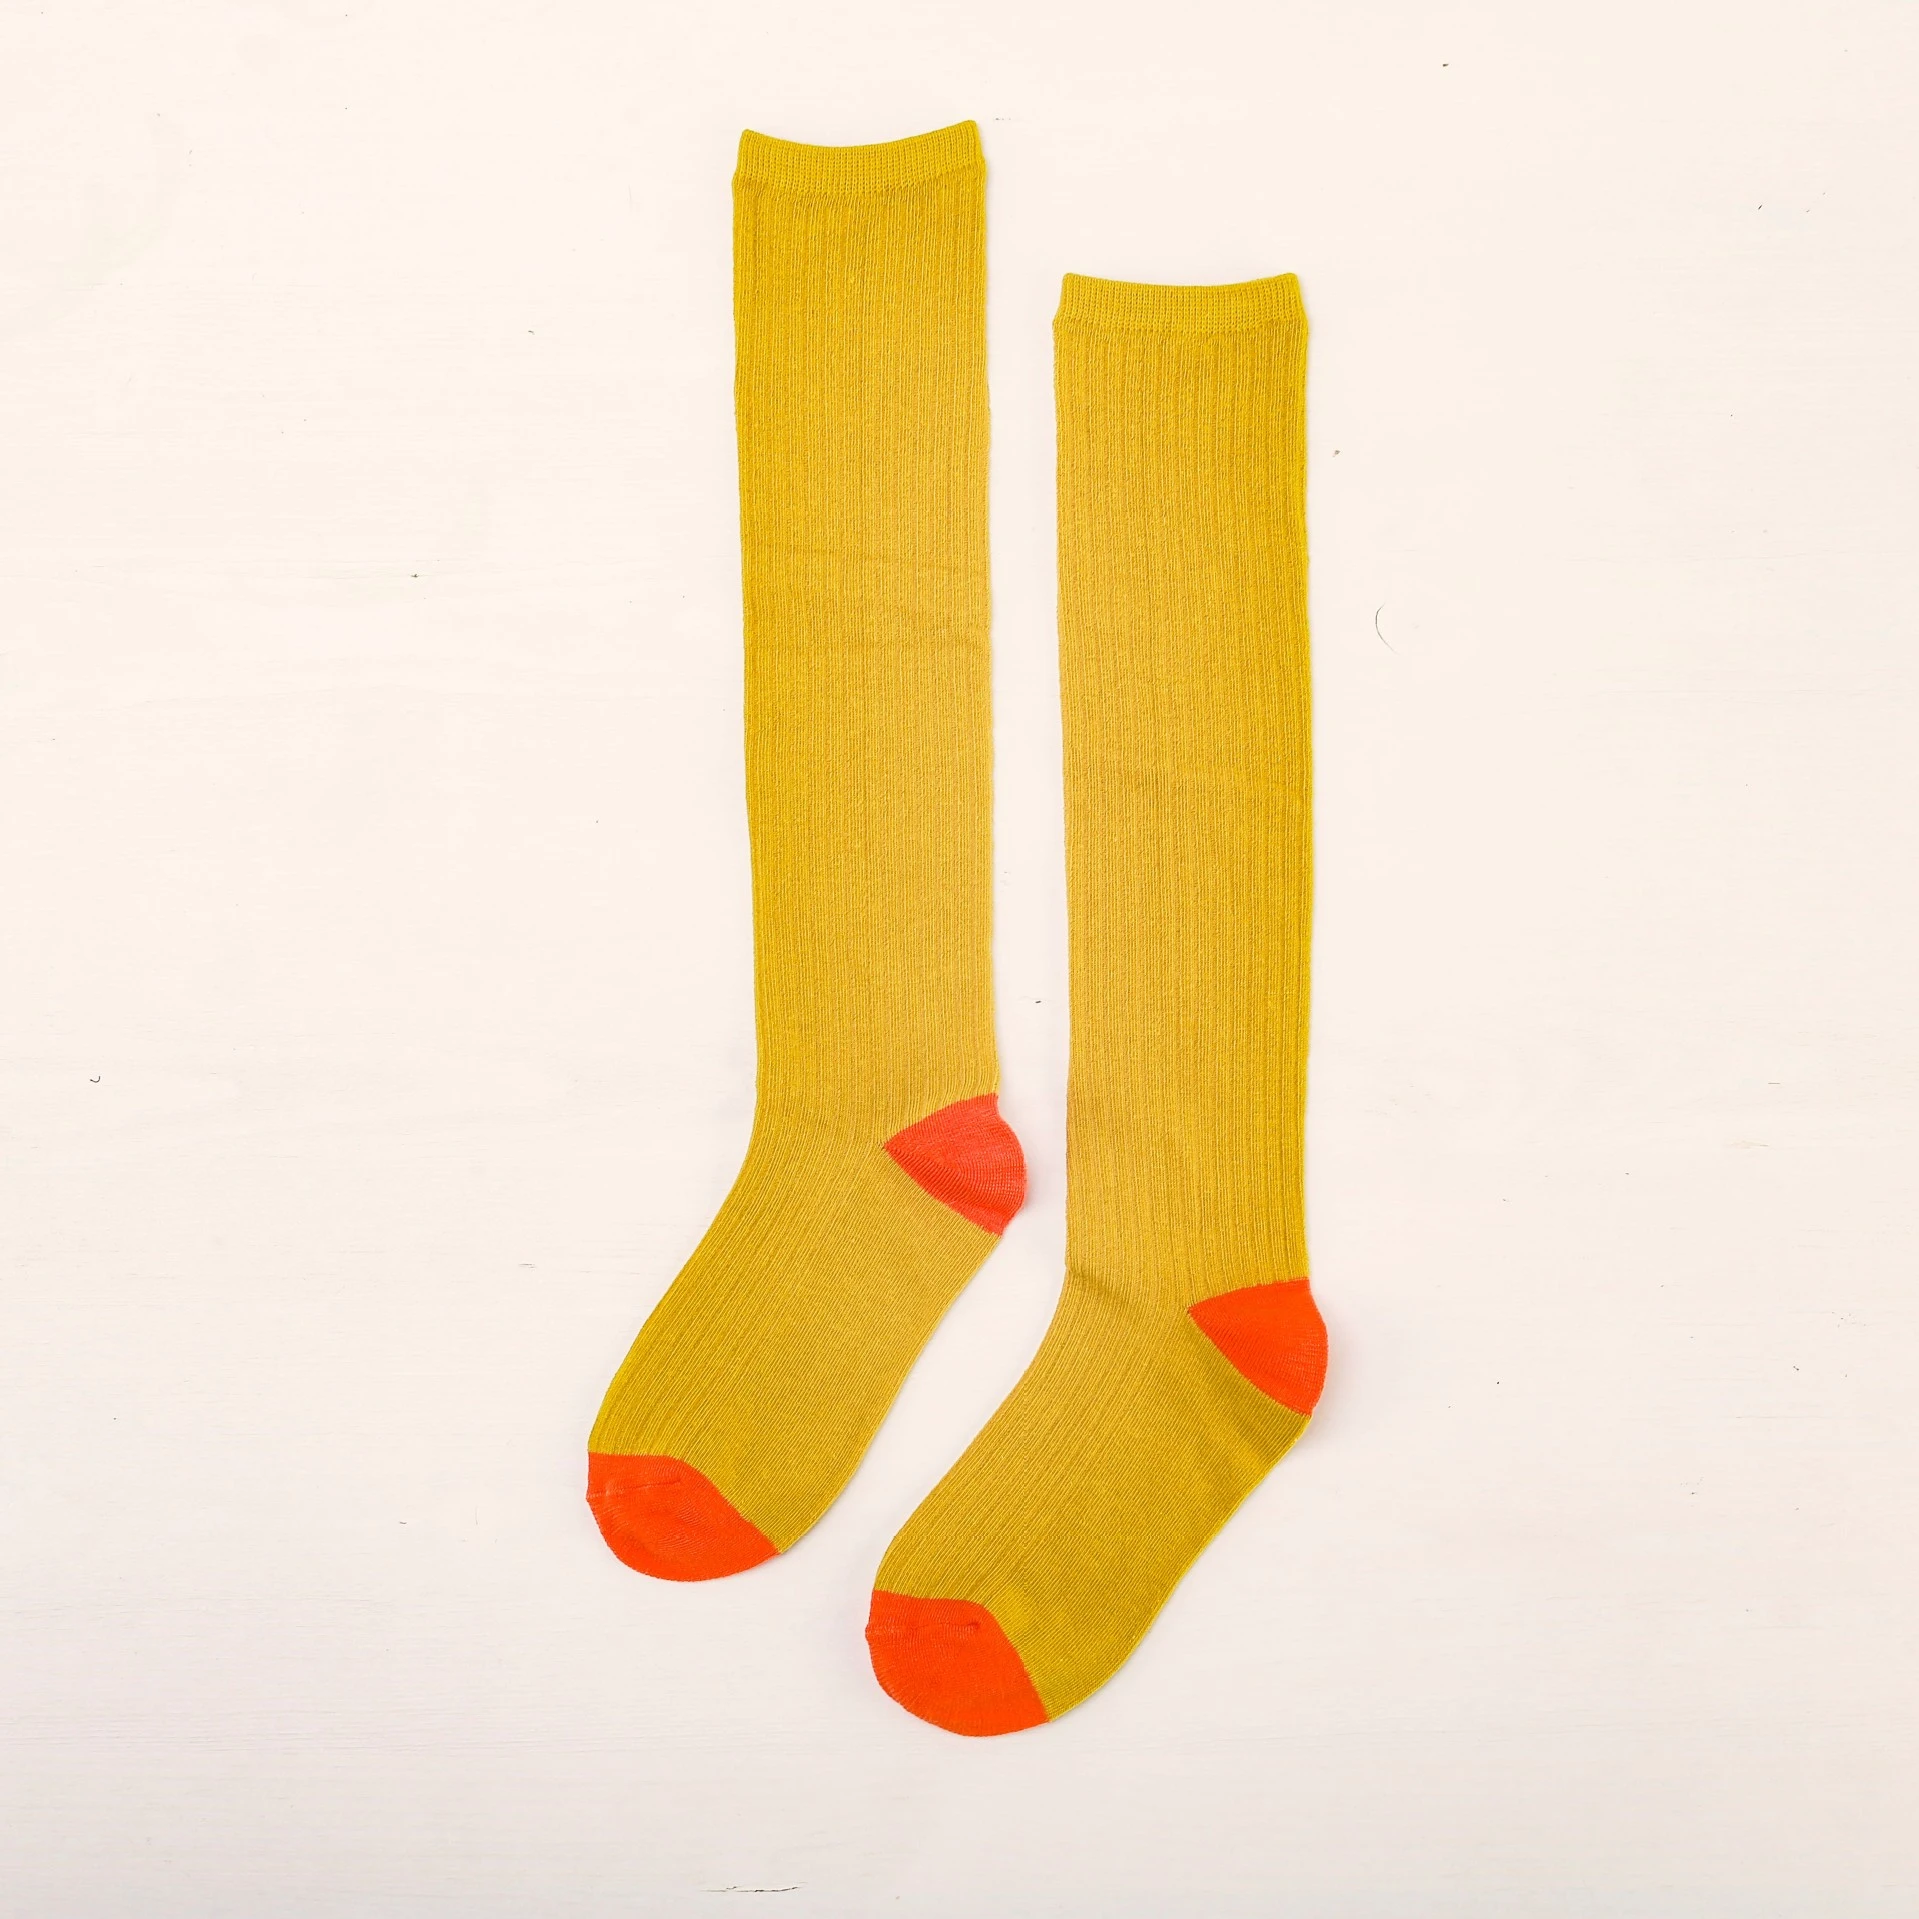 Calf High socks female plain thin tube socks cotton color stockings student cotton calf socks